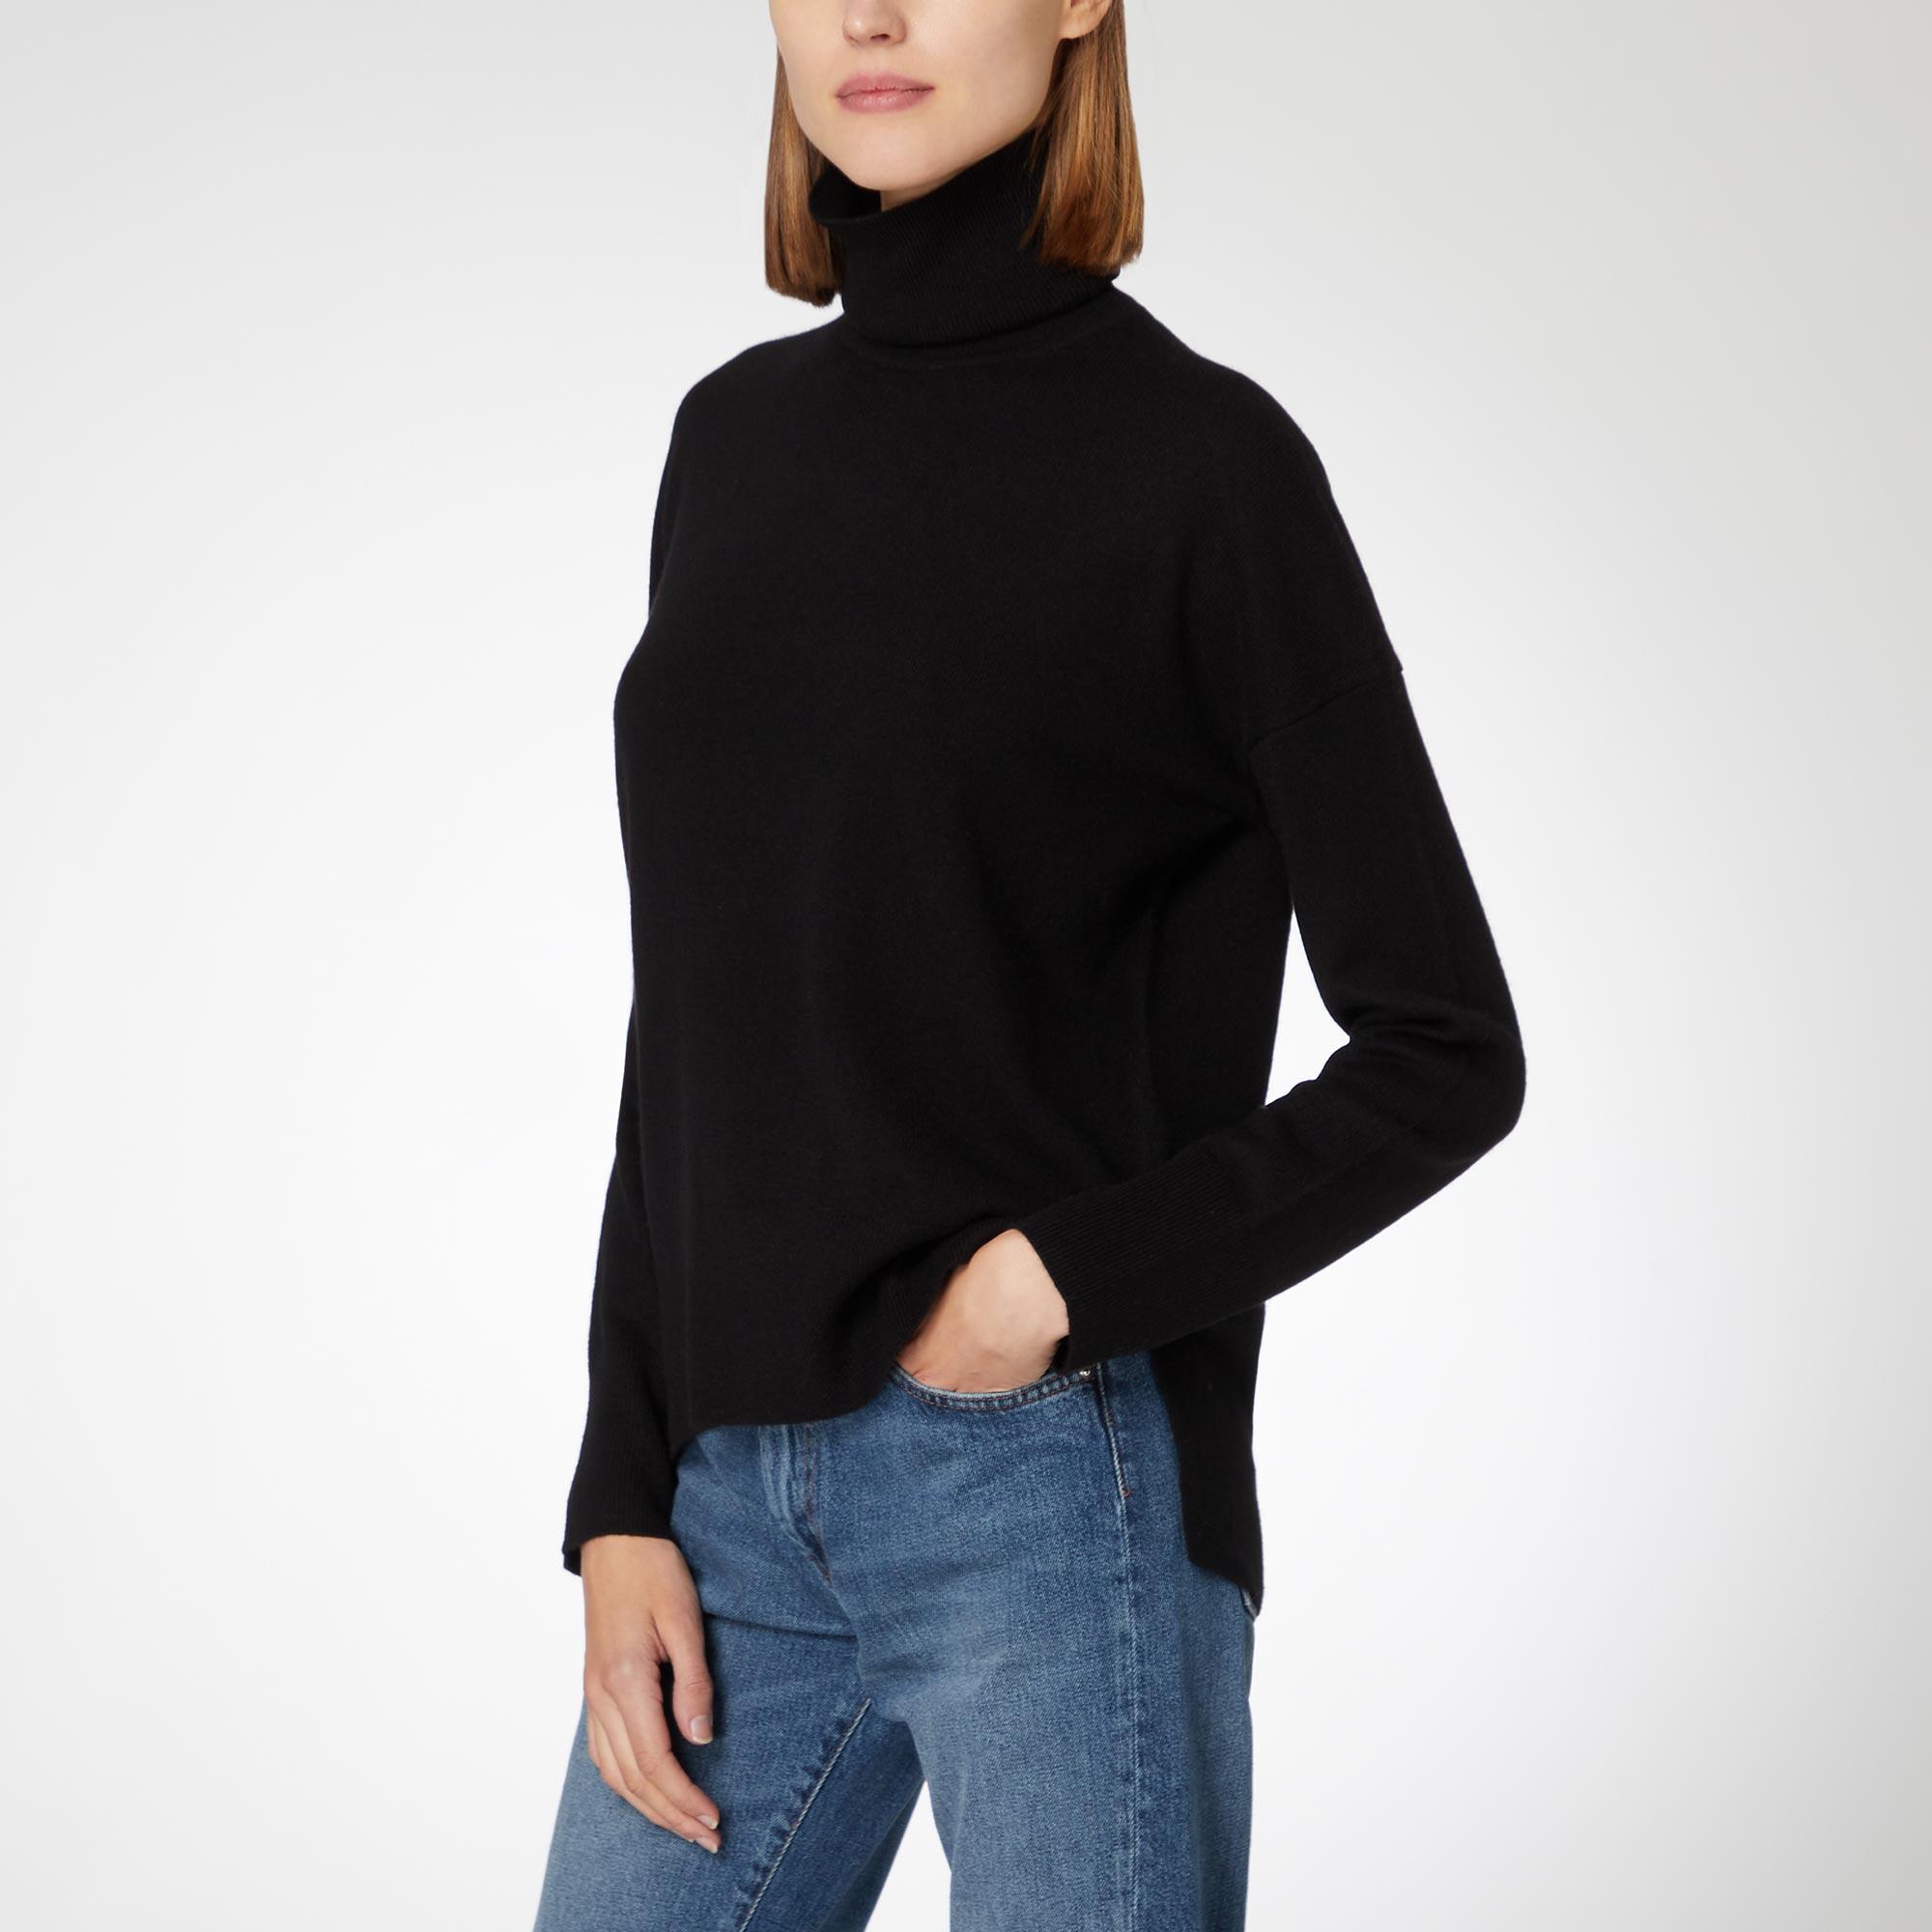 Karenia Turtleneck Sweater